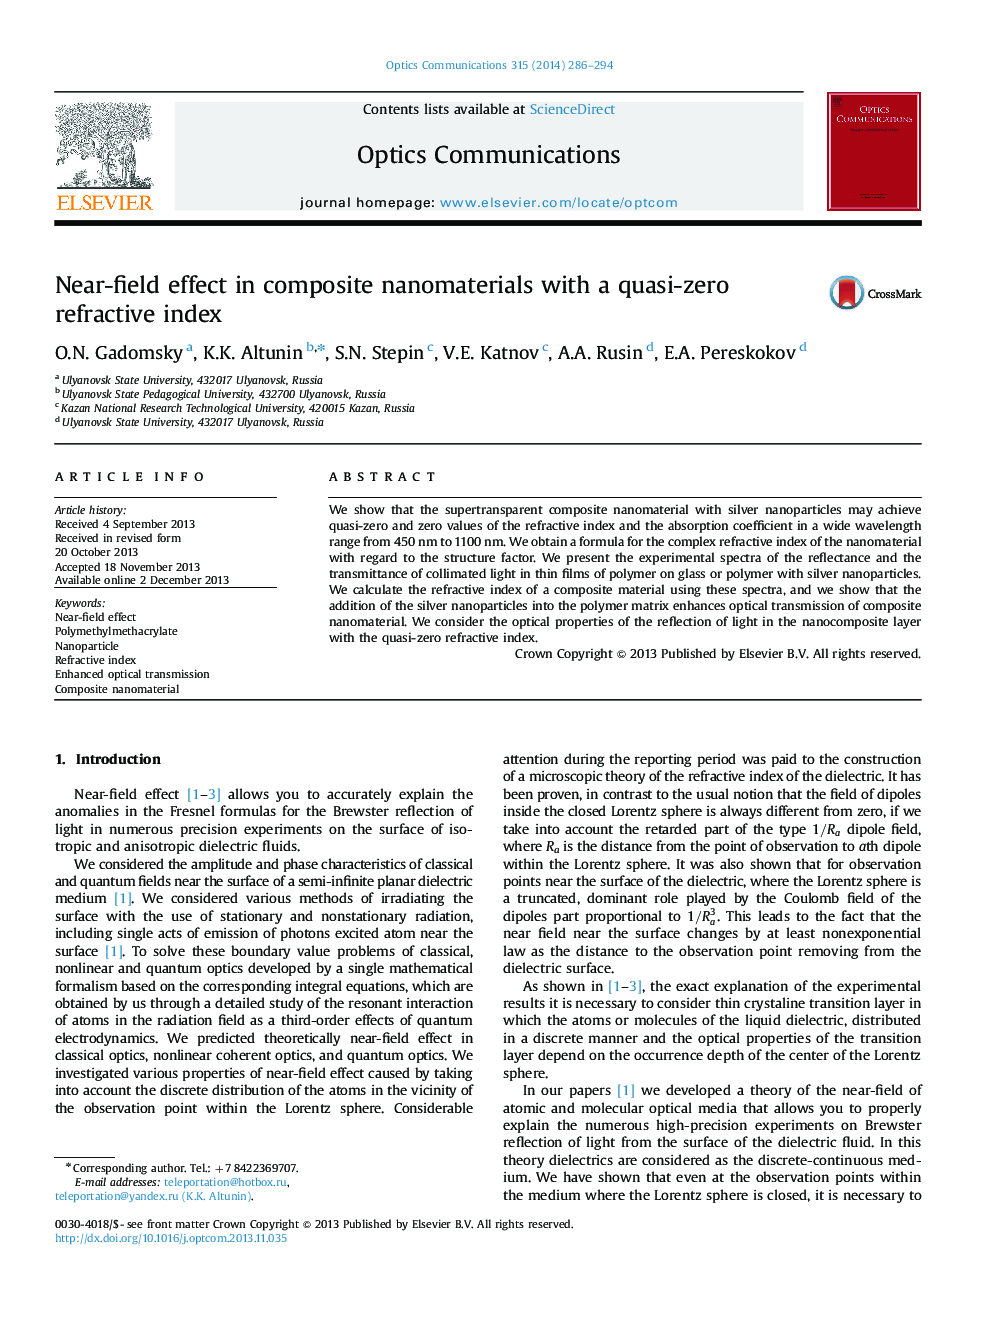 Near-field effect in composite nanomaterials with a quasi-zero refractive index